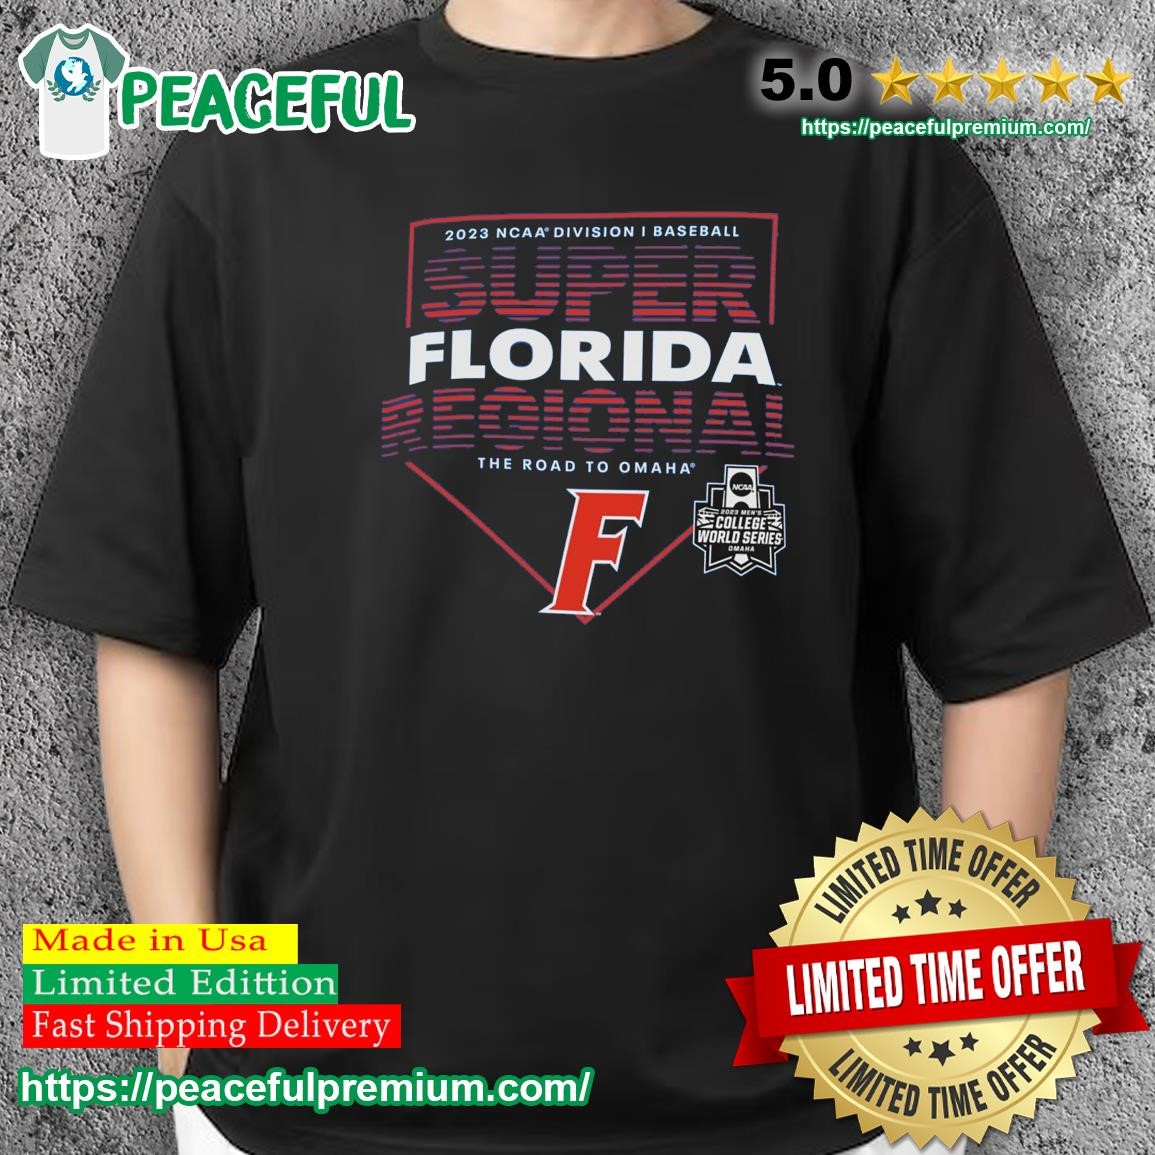 Baseball Florida Gators NCAA Jerseys for sale